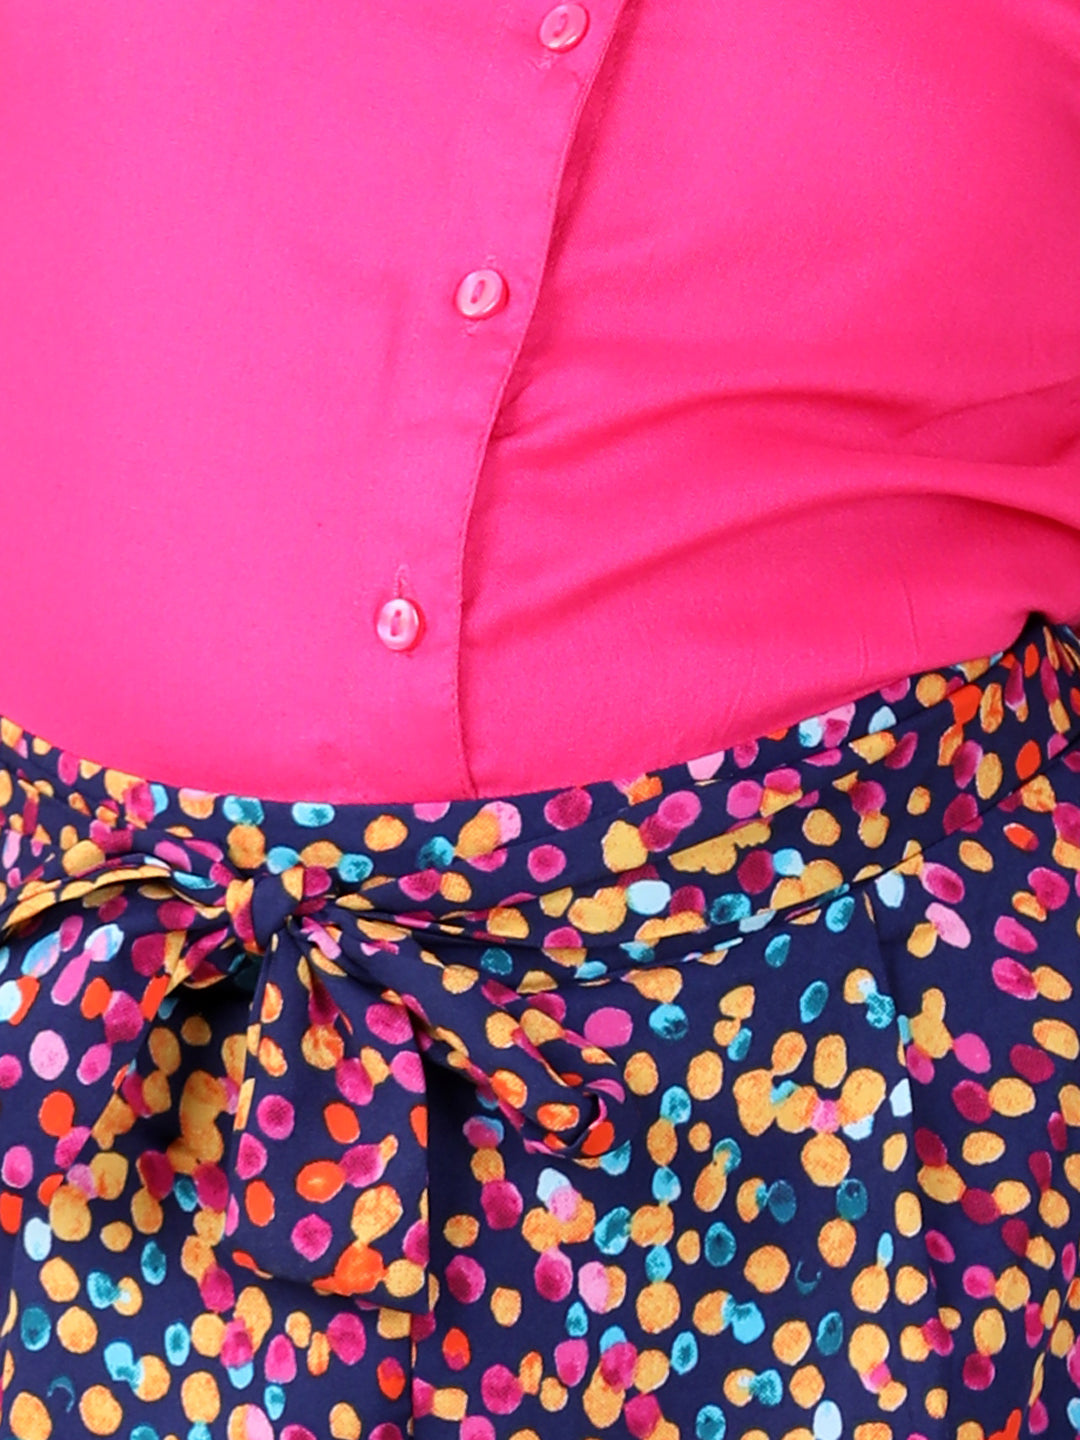 StyleStone Girls Pink and Multicolored Rayon Jumpsuit